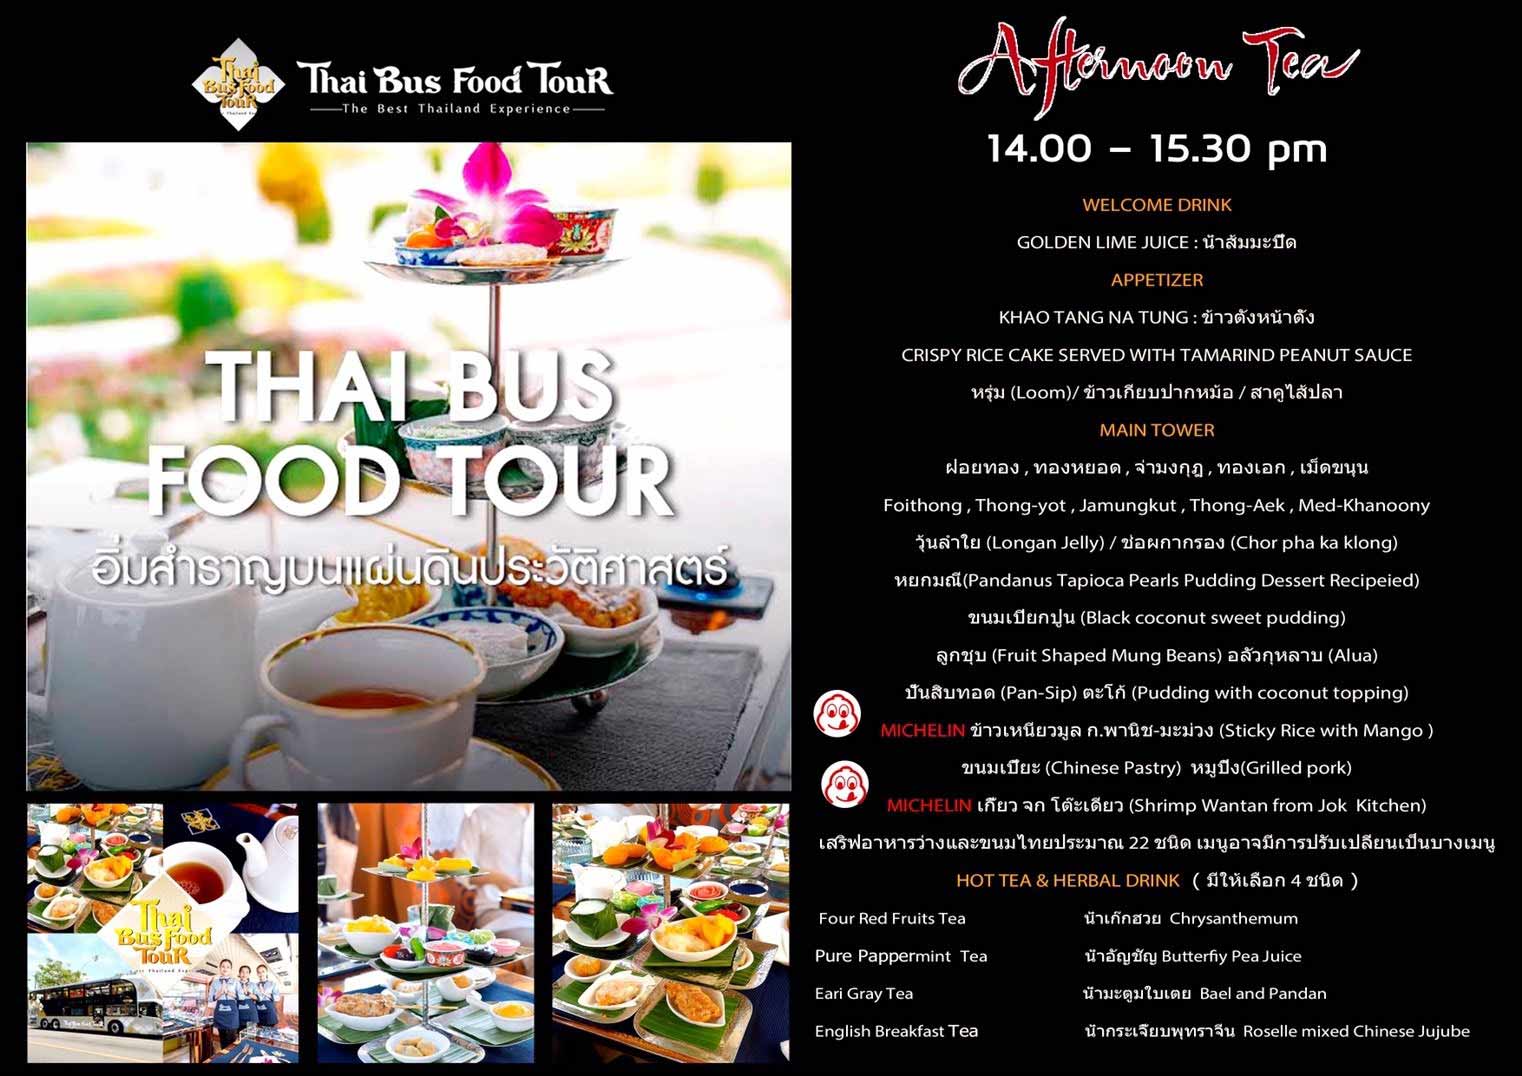 Thai bus Food tour afternoon tea